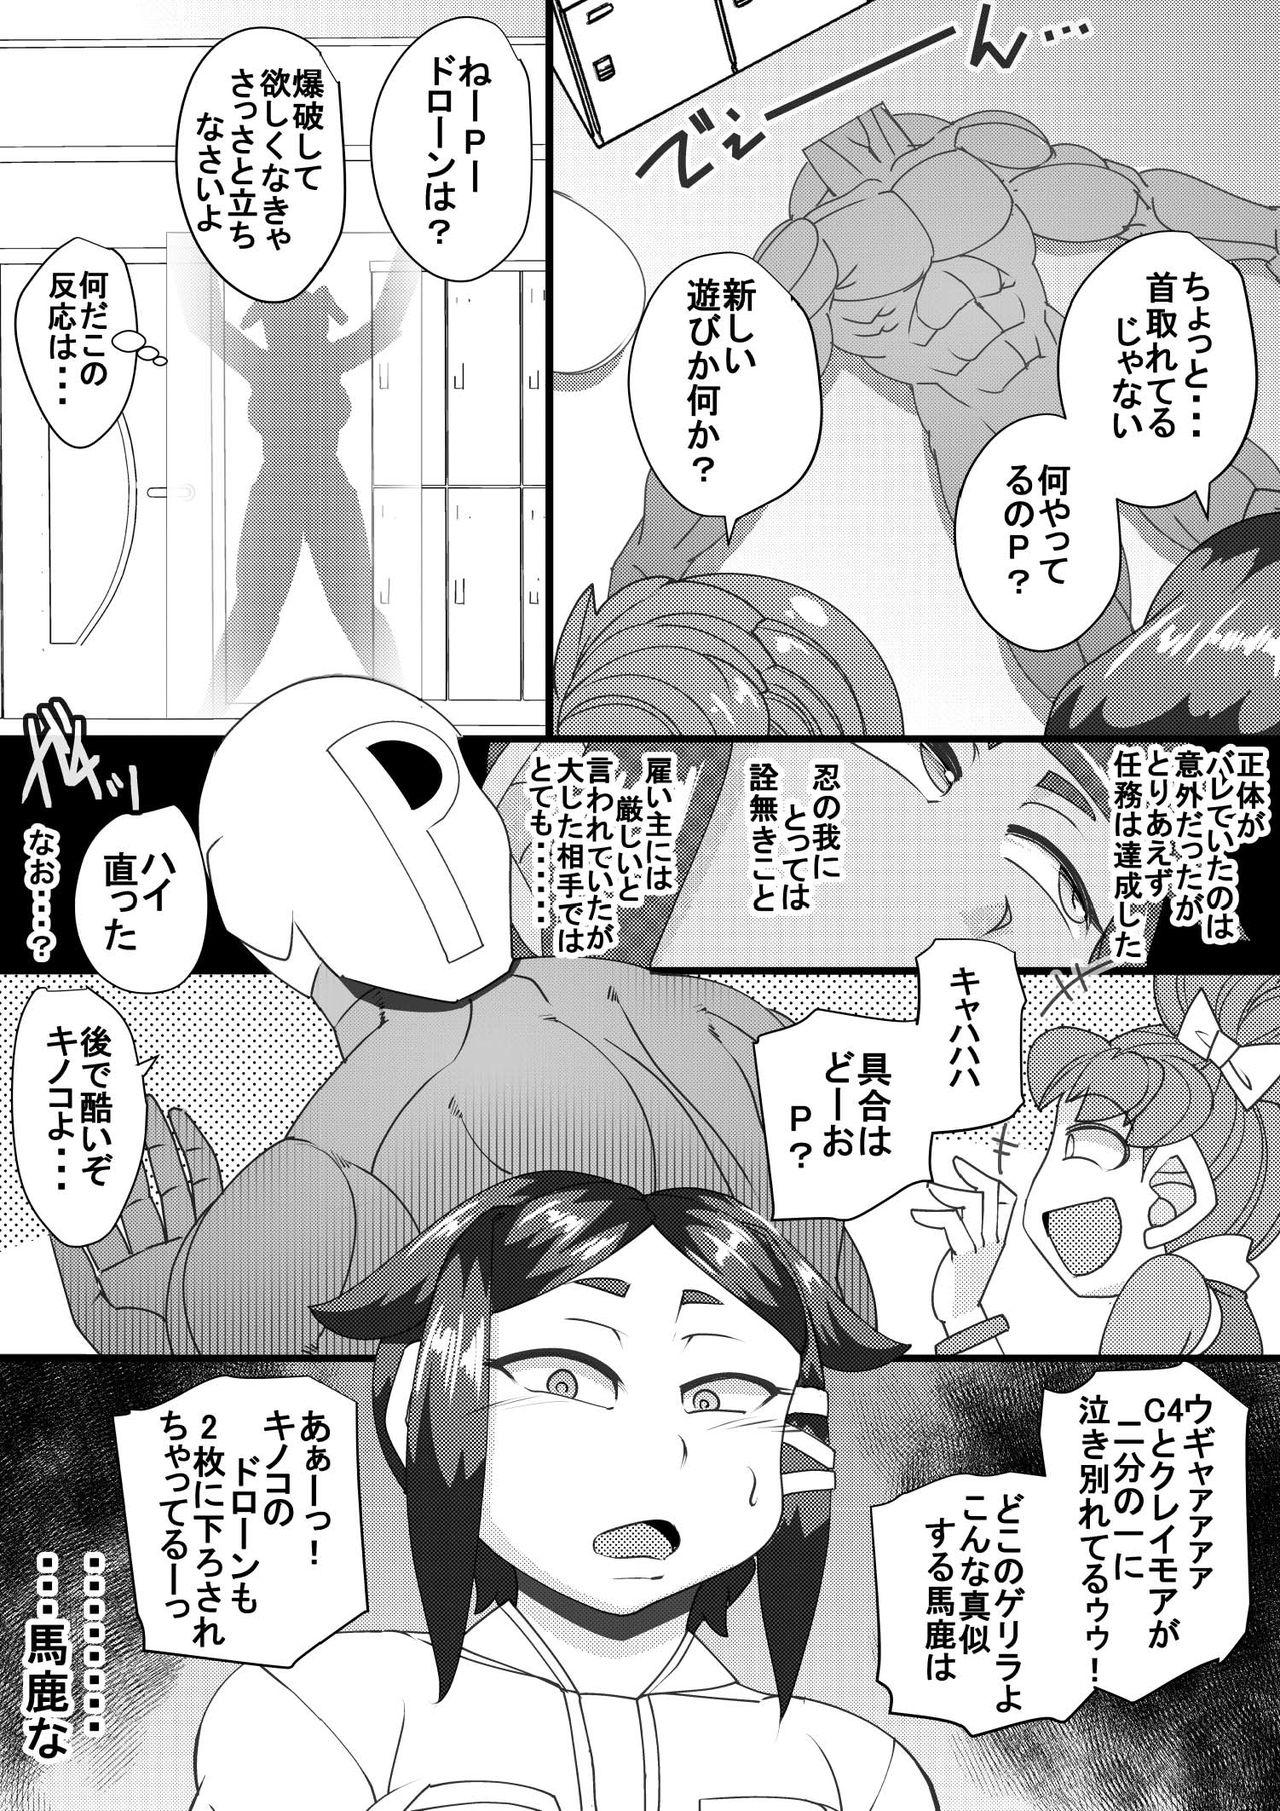 Juicy Haramachi 6 - Original Real - Page 5